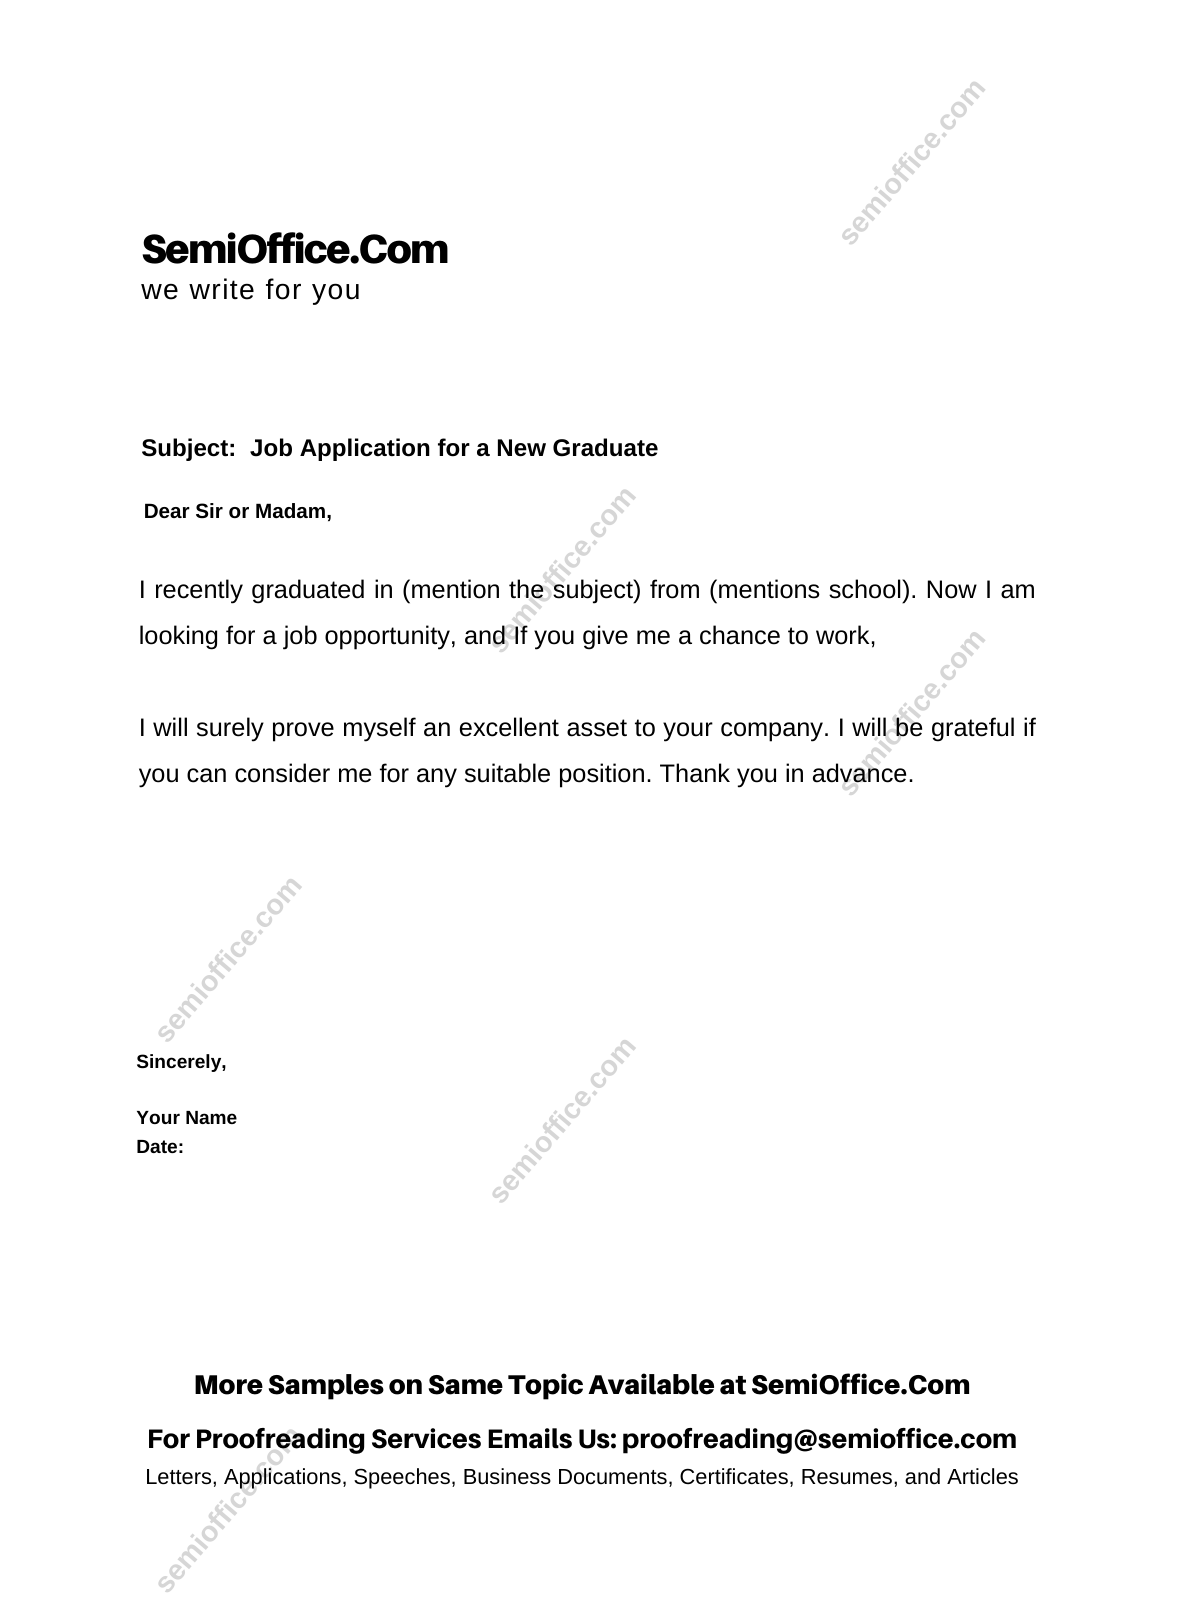 cover letter for graduate job application